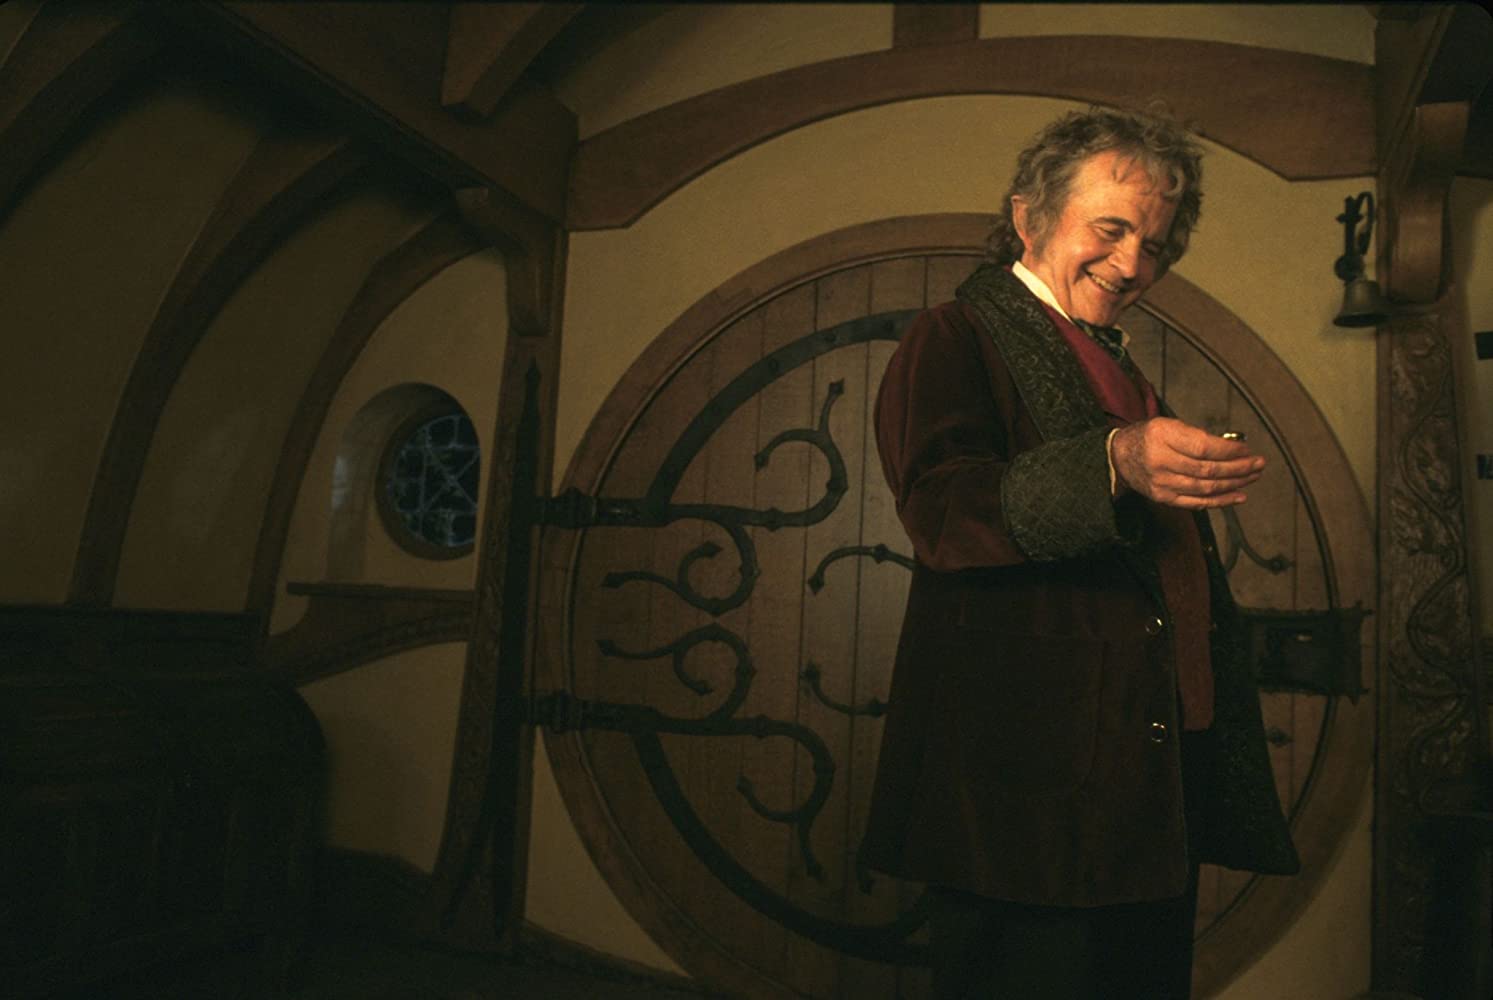 Ian Holm in The Hobbit